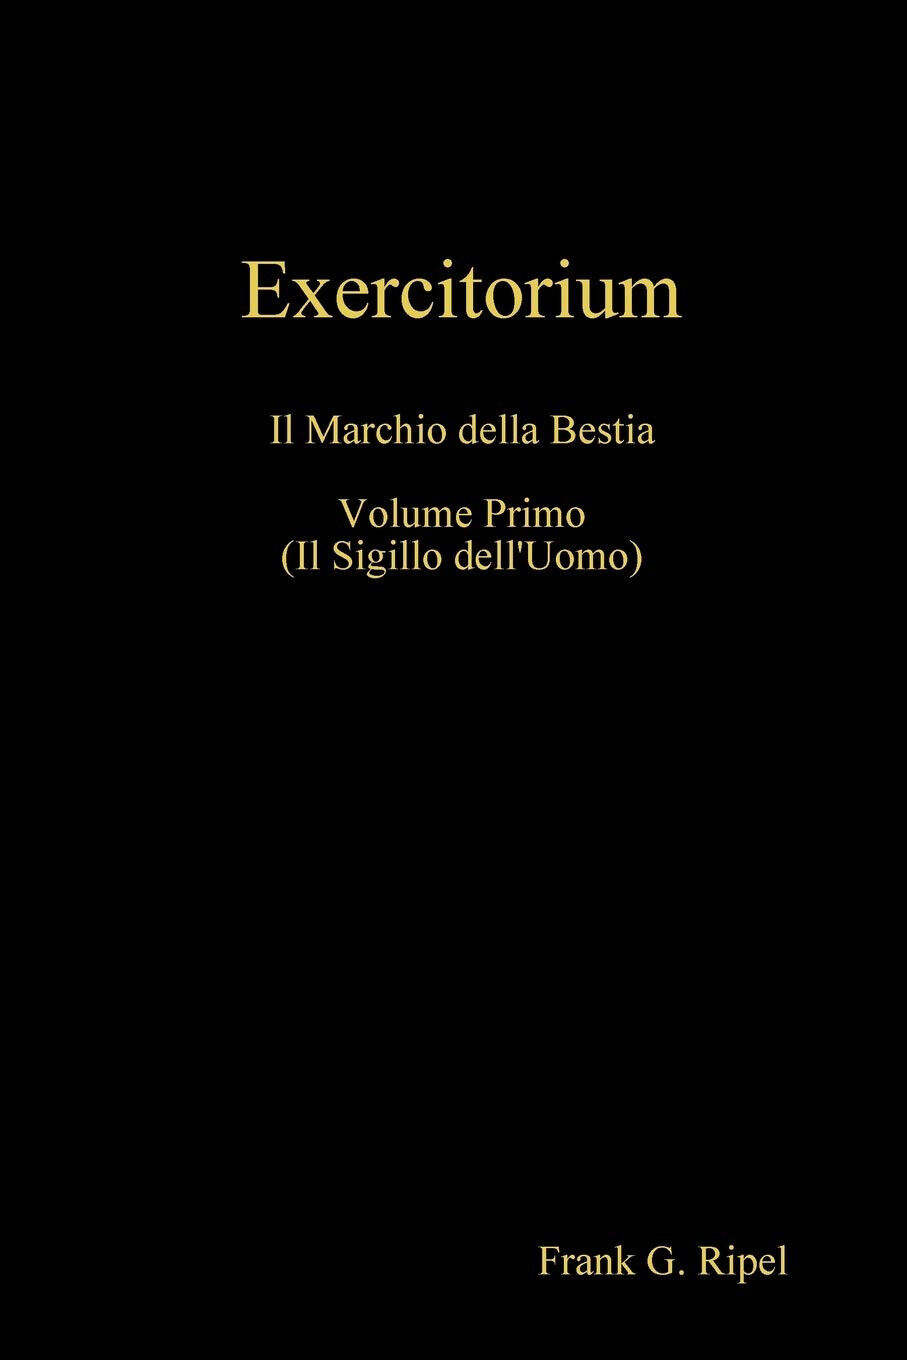 Exercitorium vol1 - Frank G. Ripel - Lulu.com, 2019 libro usato